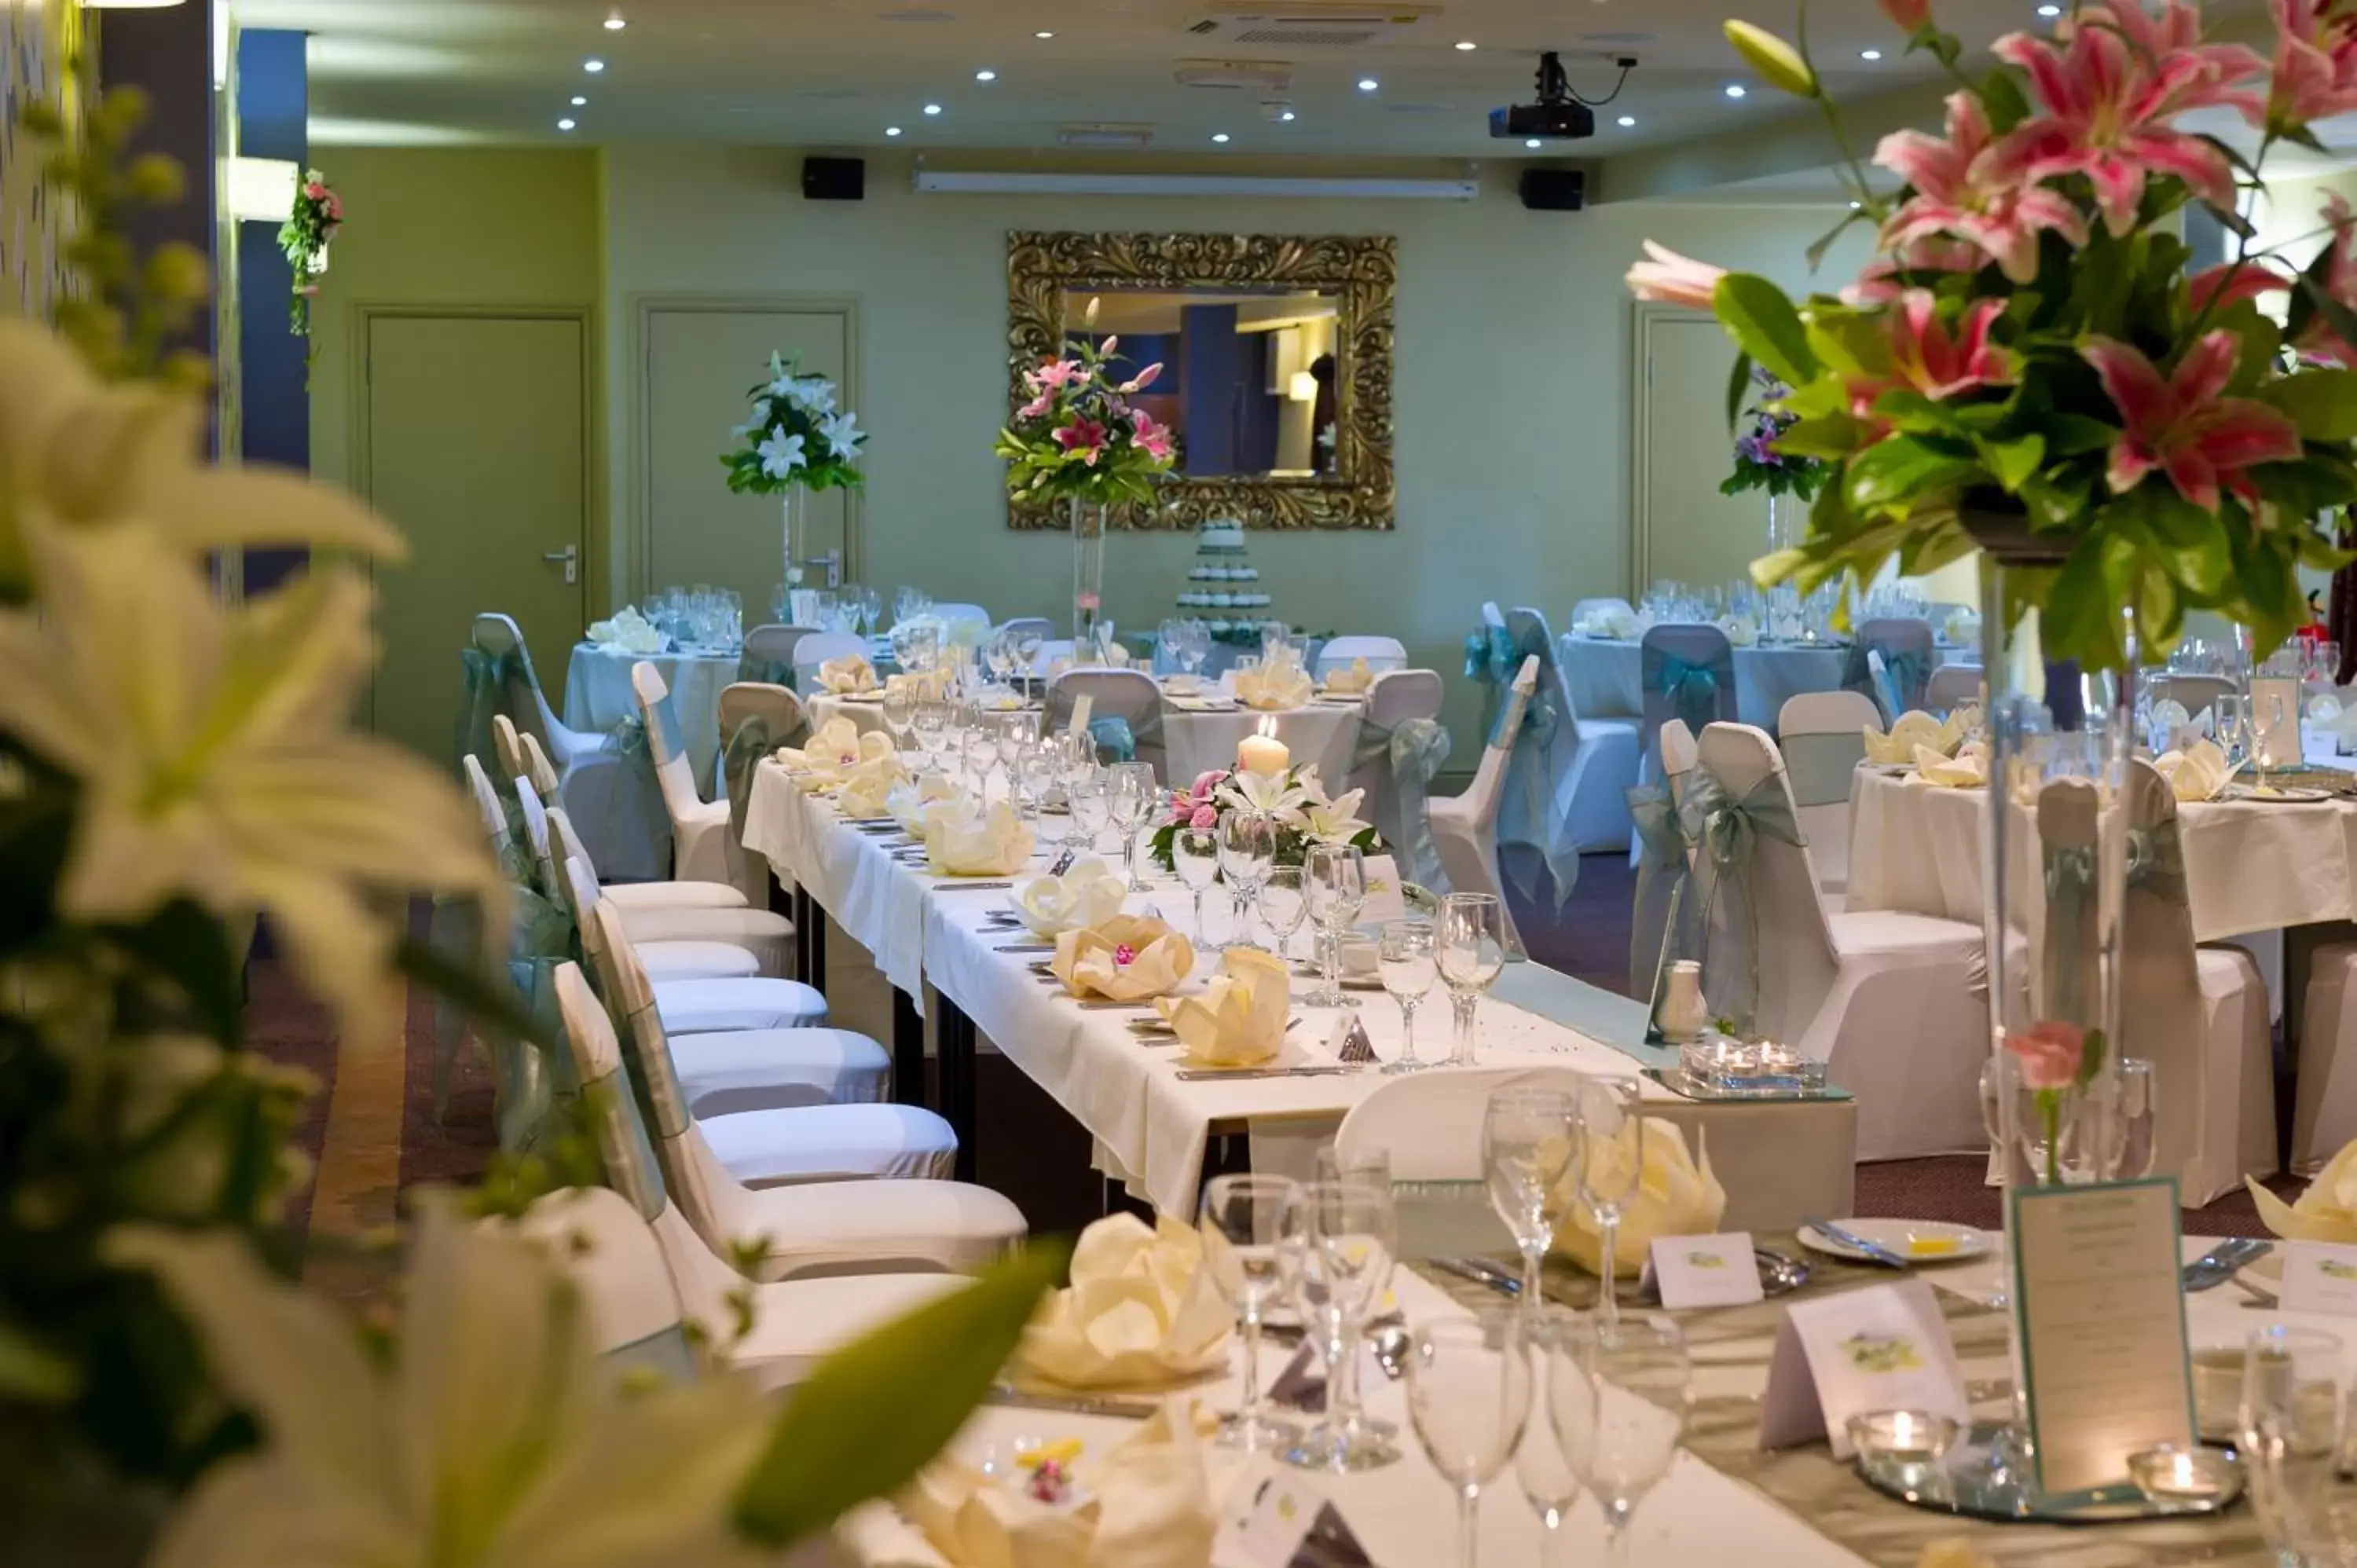 Banquet/Function facilities, Banquet Facilities in Herriots Hotel